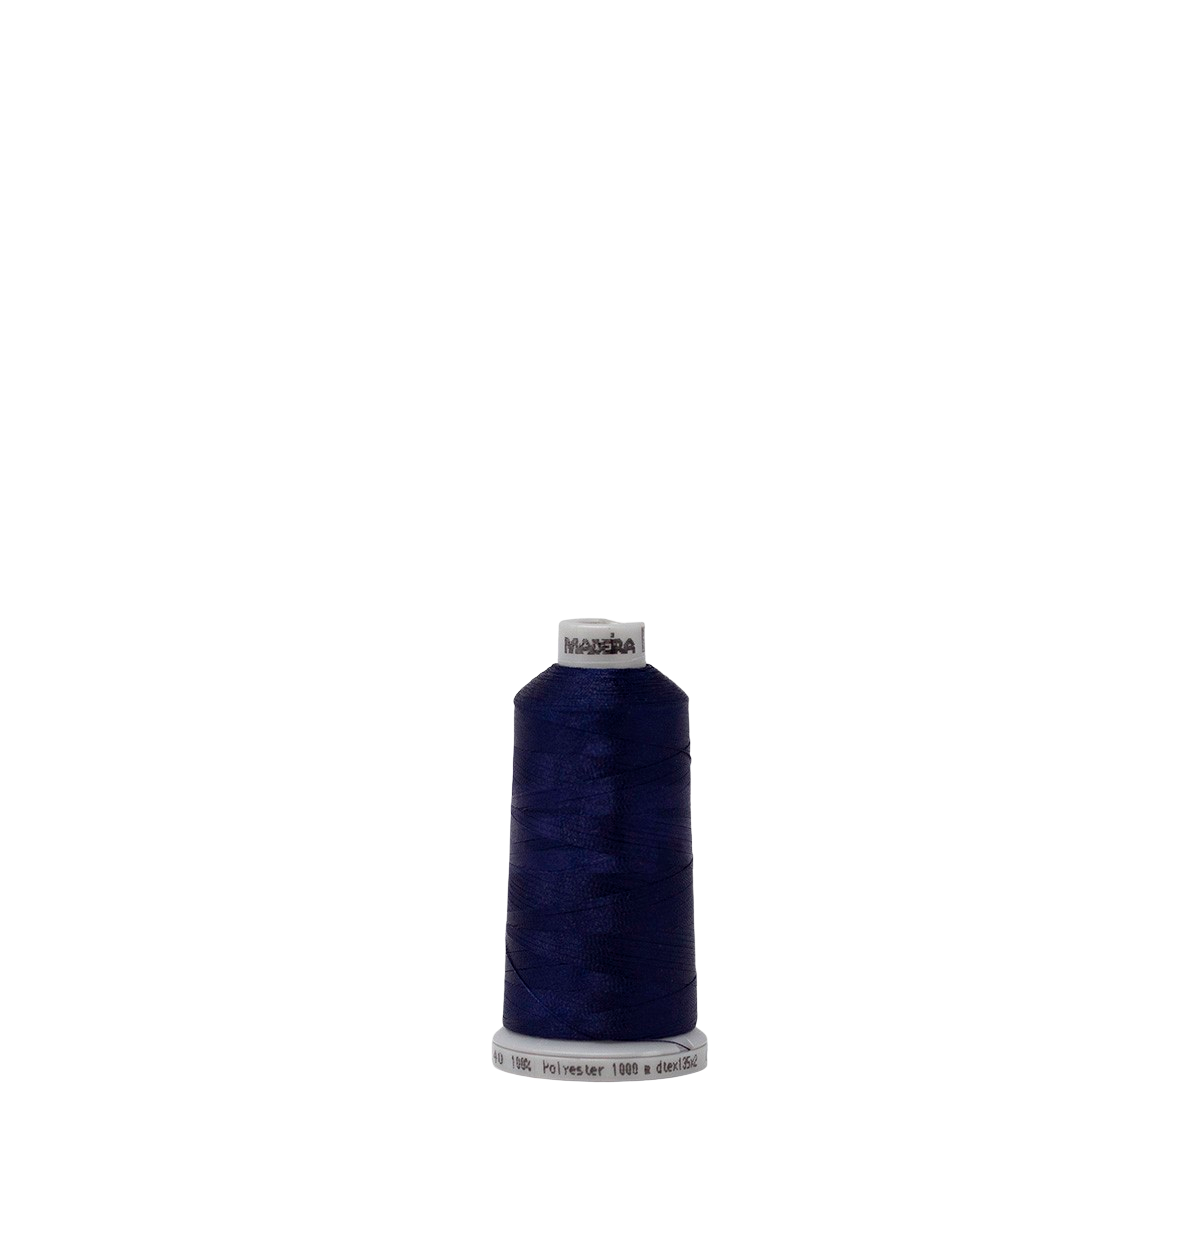 Oxford Blue 1743 #40 Weight Madeira Polyneon Thread - 0